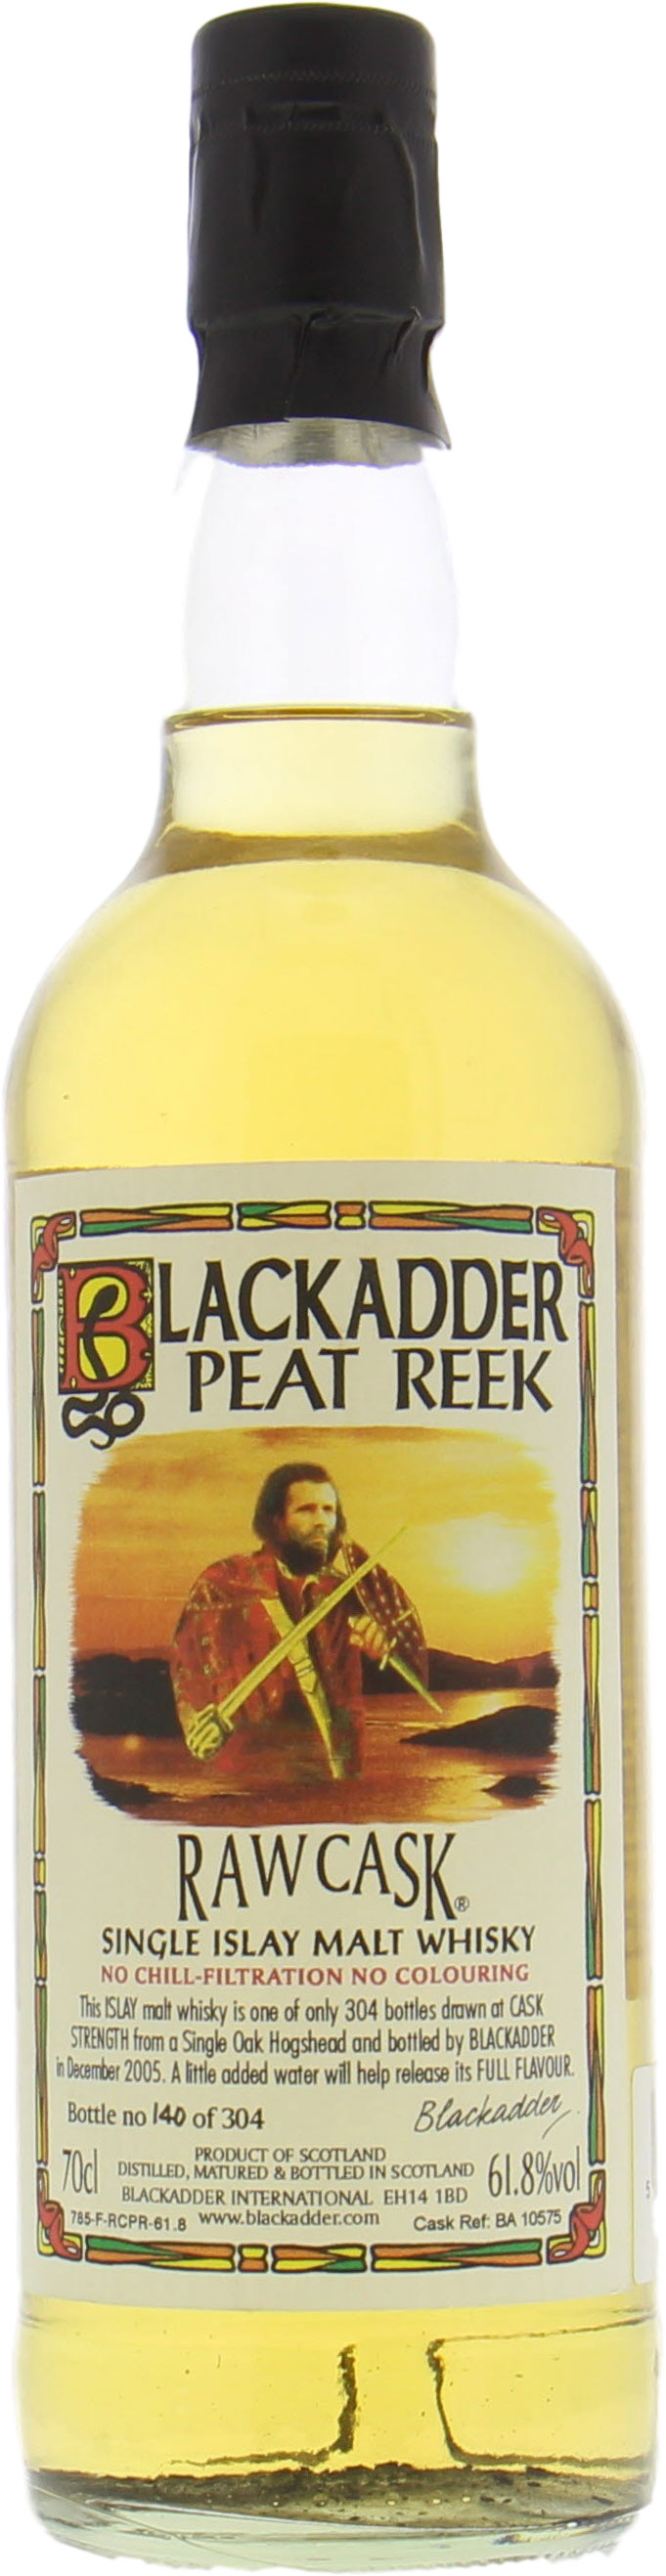 Blackadder - Peat Reek Raw Cask 10575 61.8% NV NO Original Box Included!